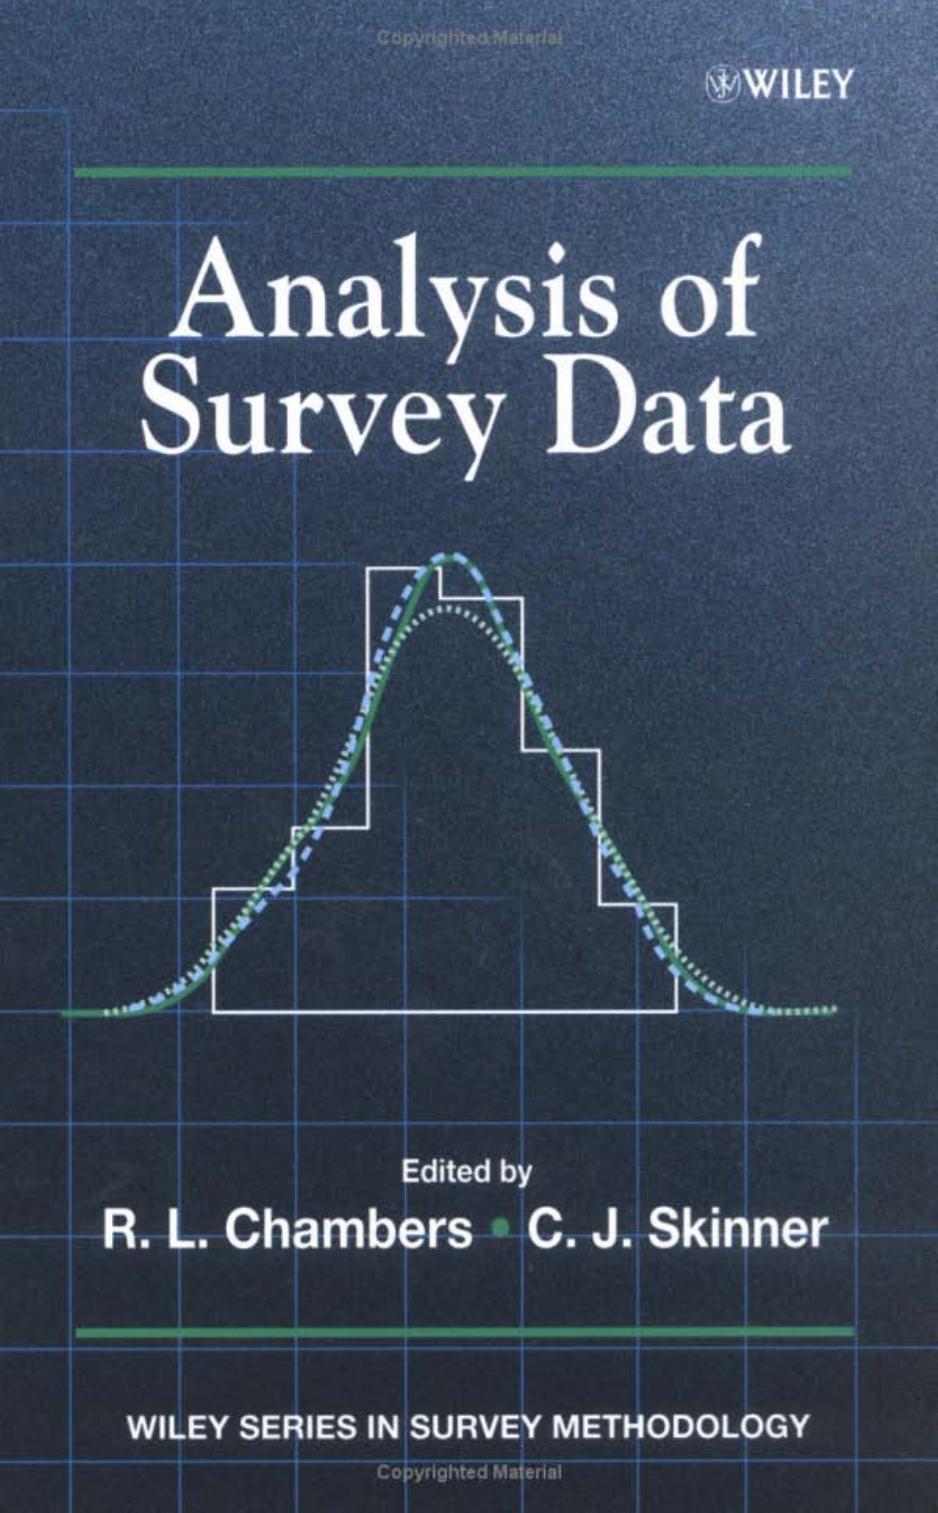 Analysis of Survey Data